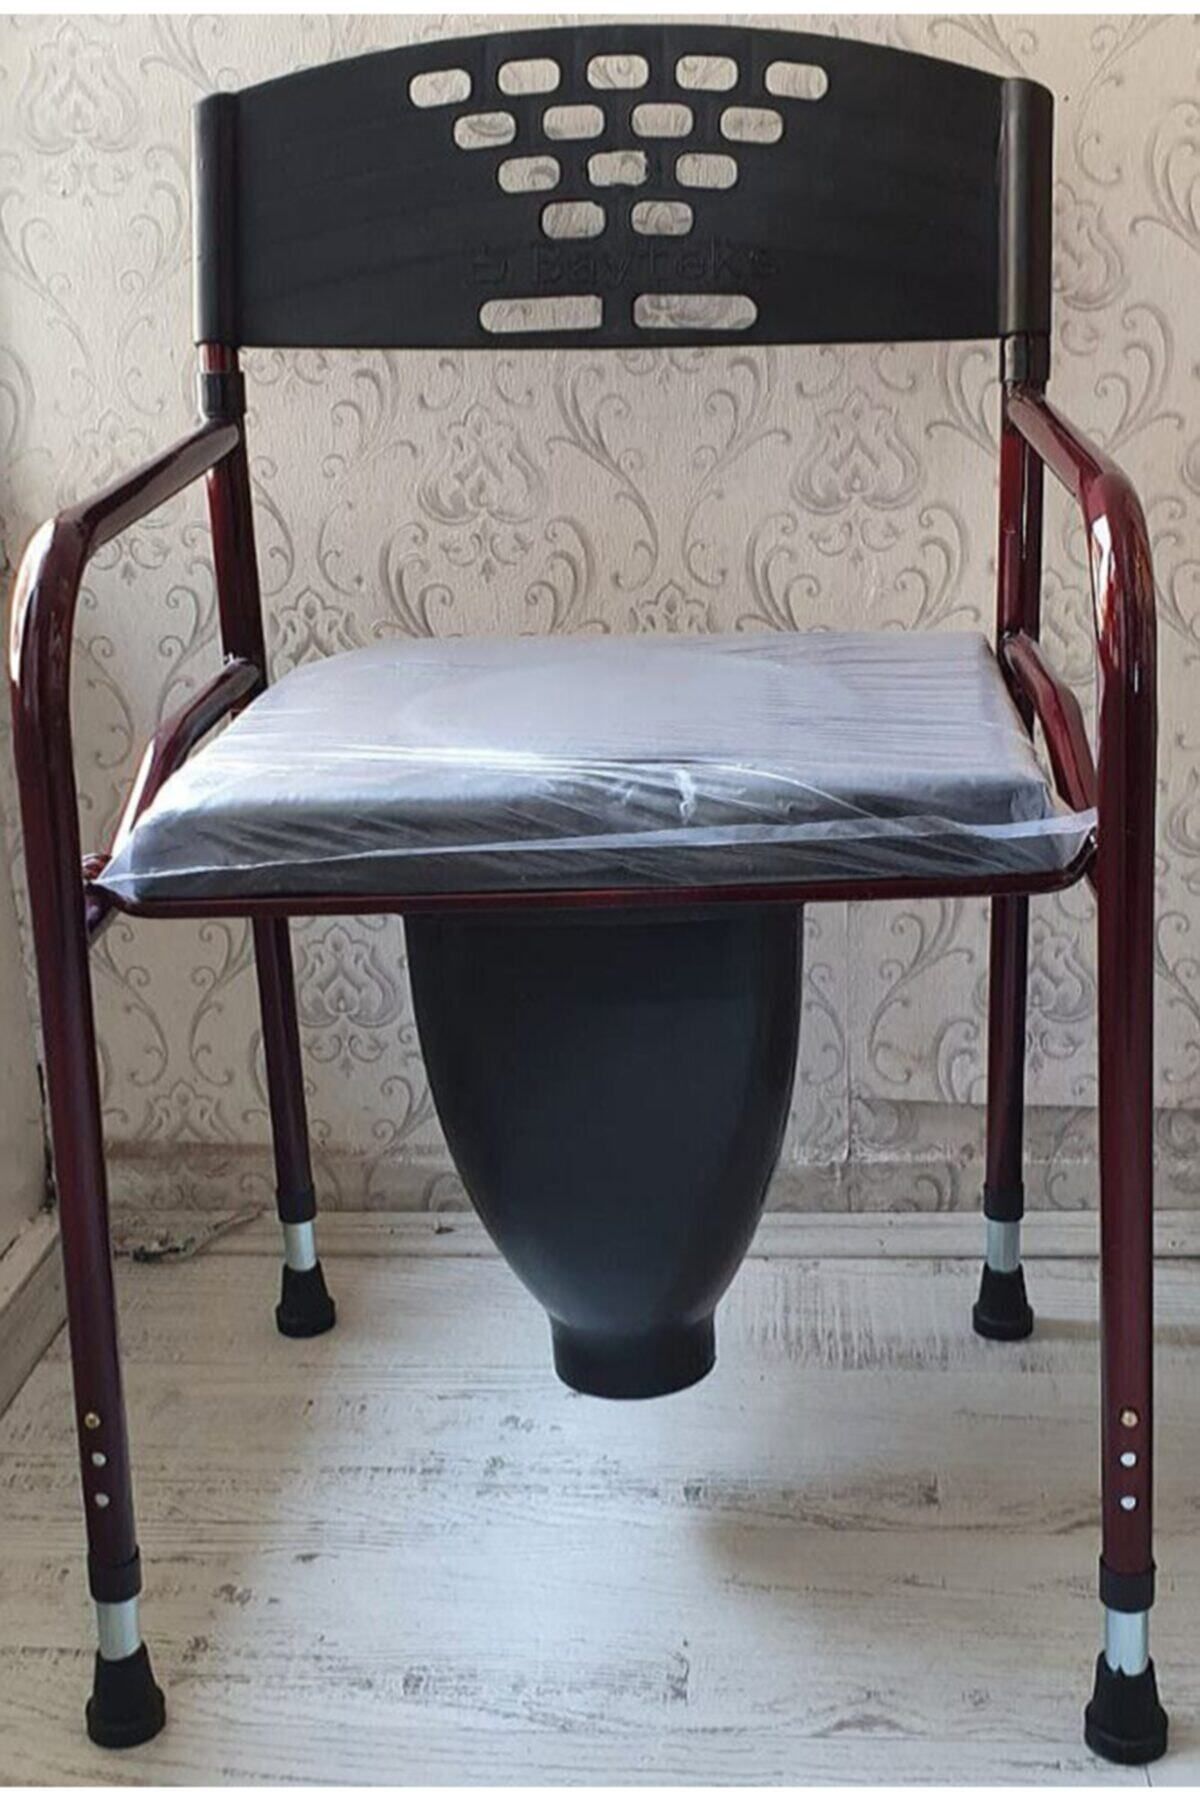 tuumex Hasta Sandalyesi Hunili Direk Wc Alaturka Tuvalet Üzerine Uygun Sadece Hunii - Huni Uzatma